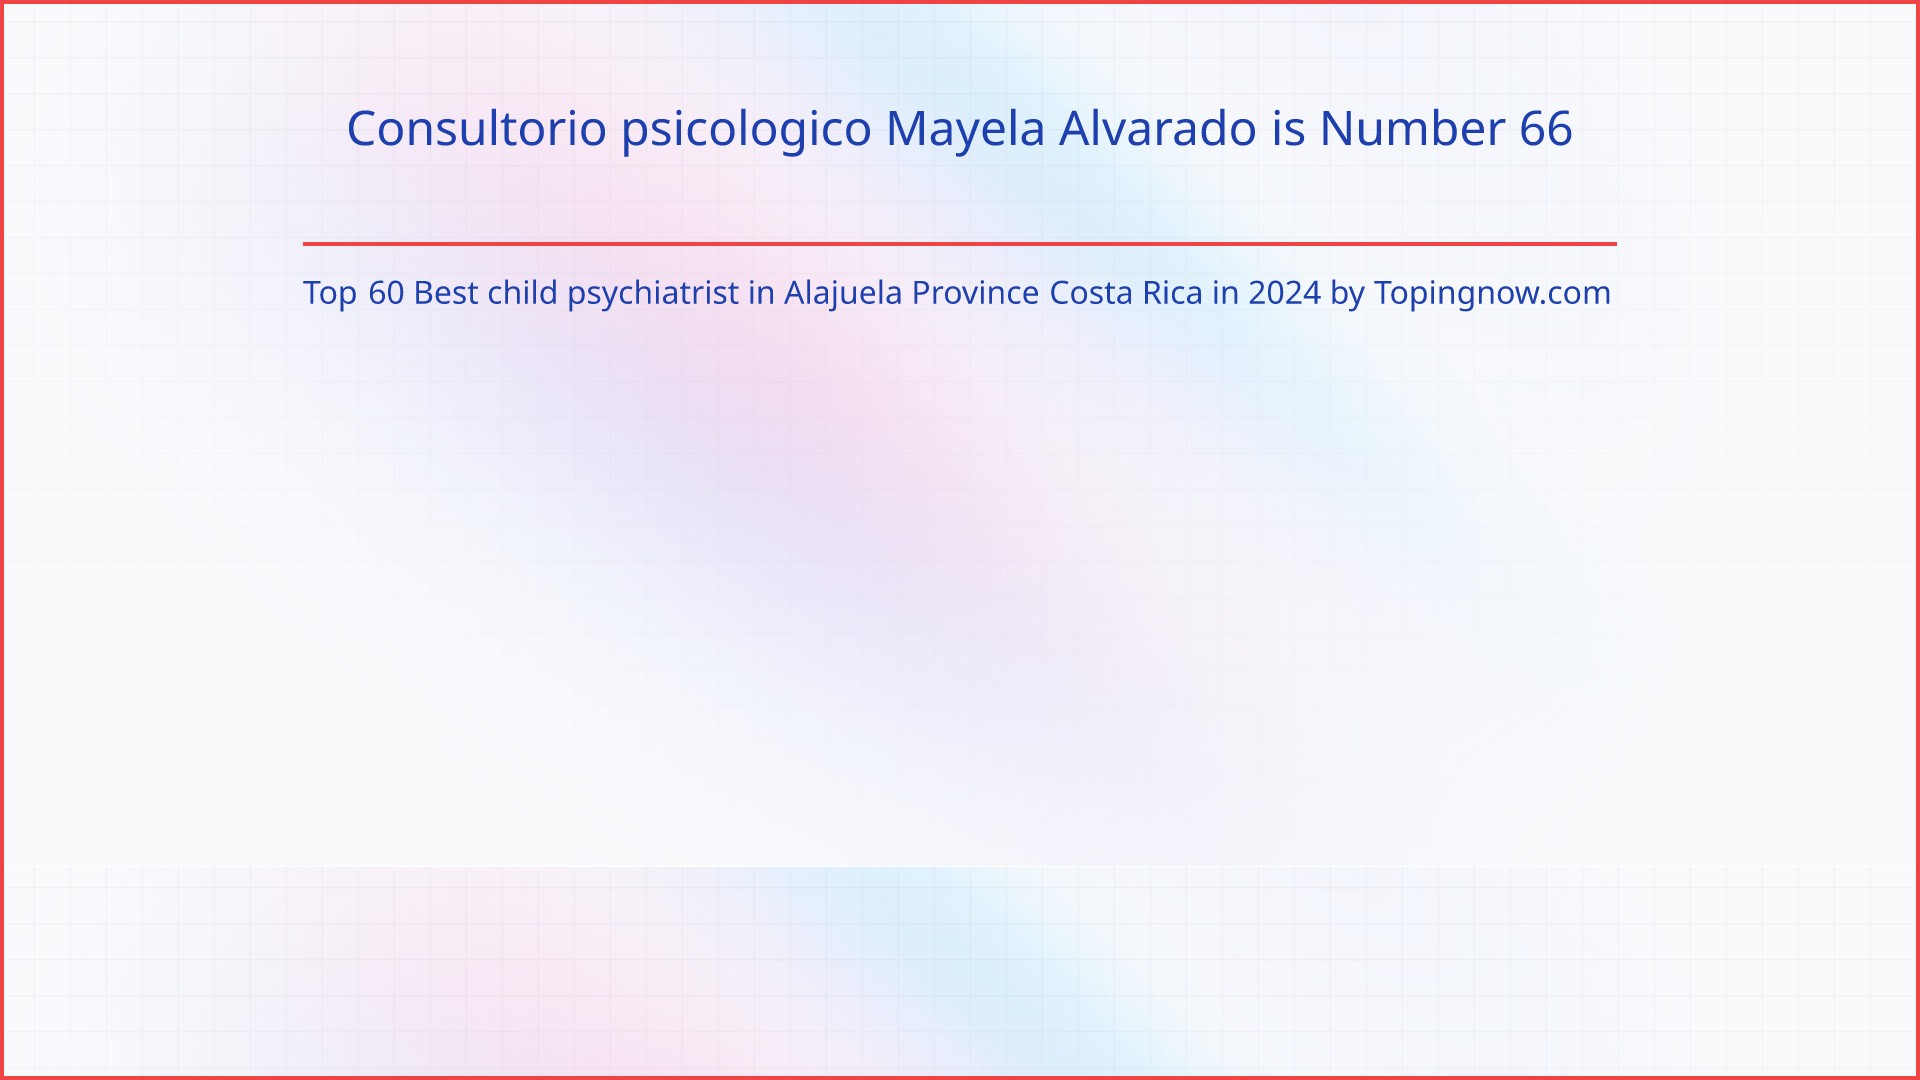 Consultorio psicologico Mayela Alvarado: Top 60 Best child psychiatrist in Alajuela Province Costa Rica in 2024